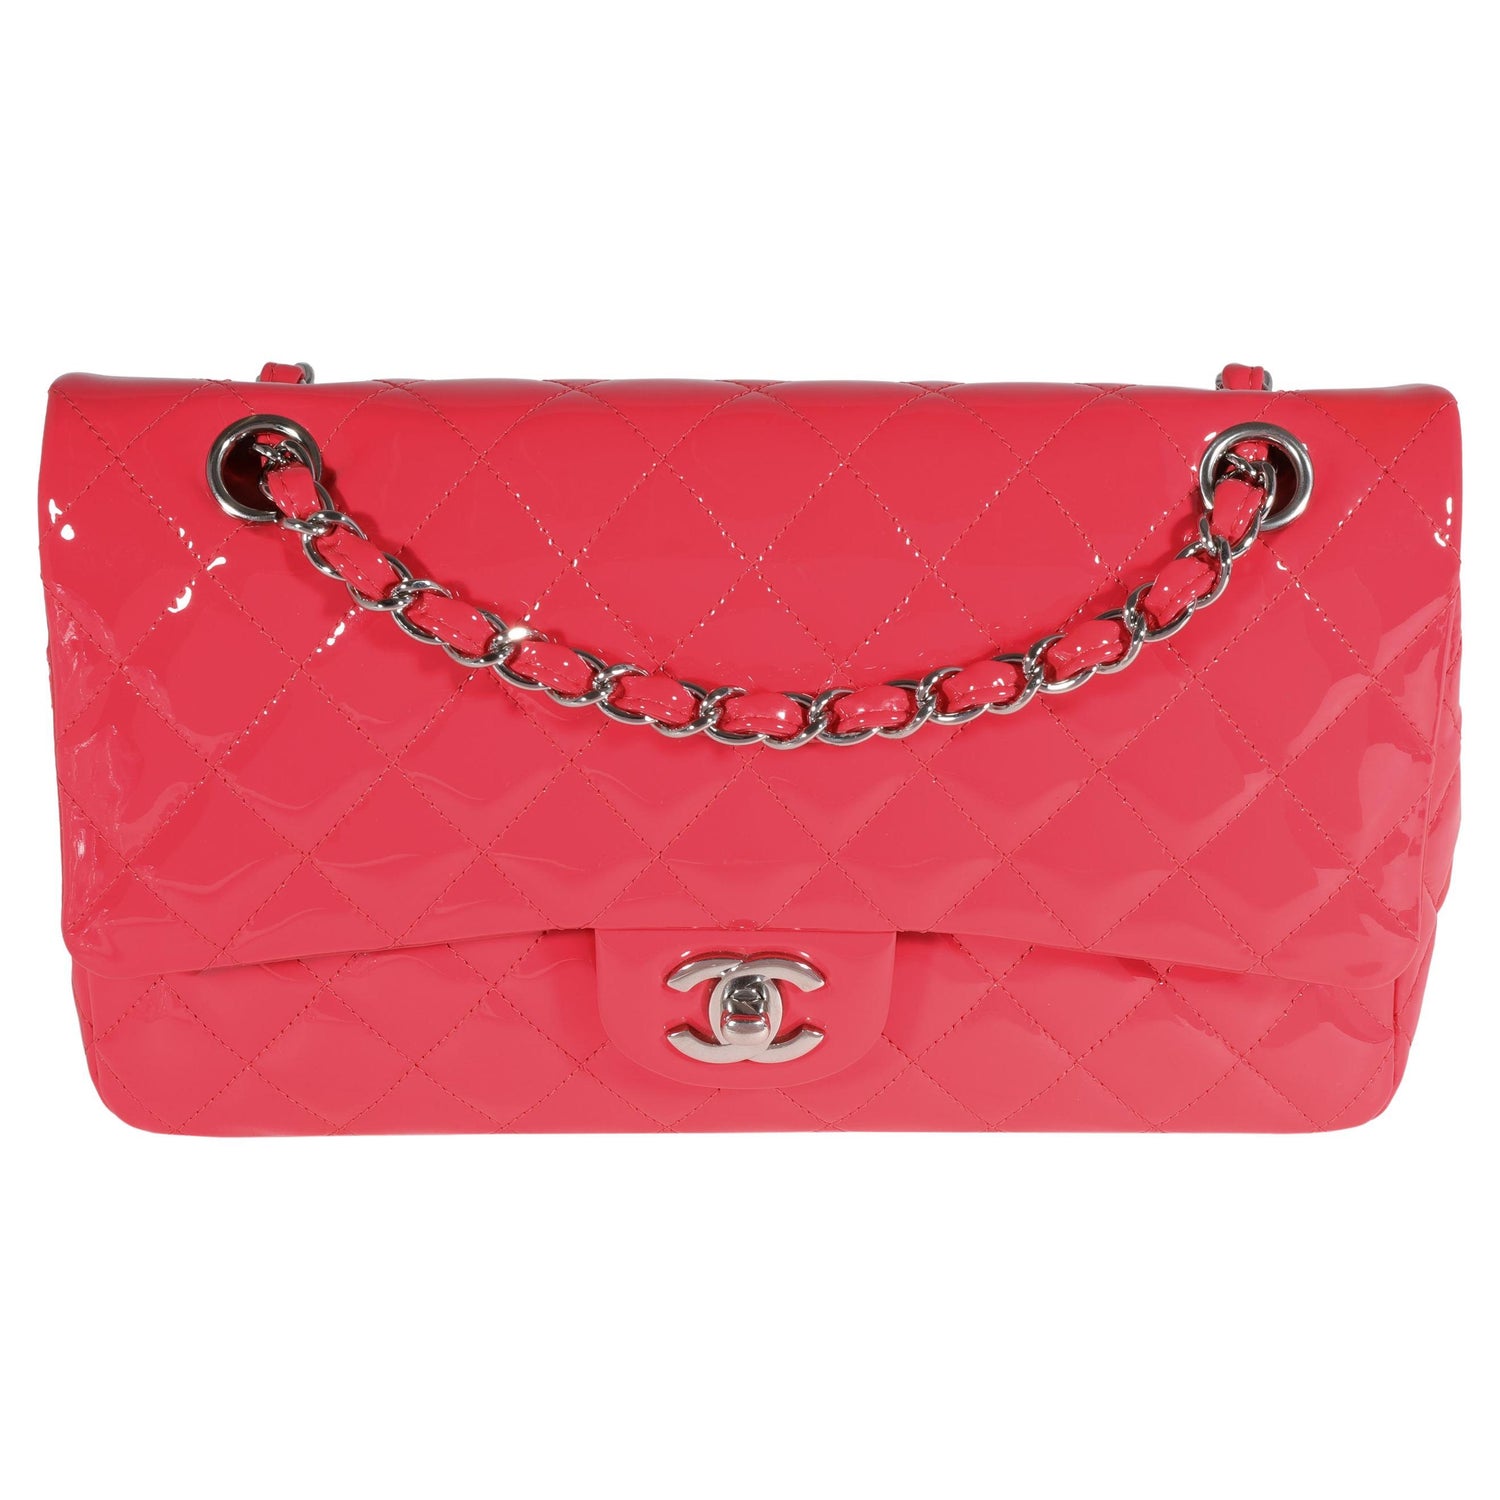 Chanel Pink Ombré Sequin Mini Flap Bag at 1stDibs